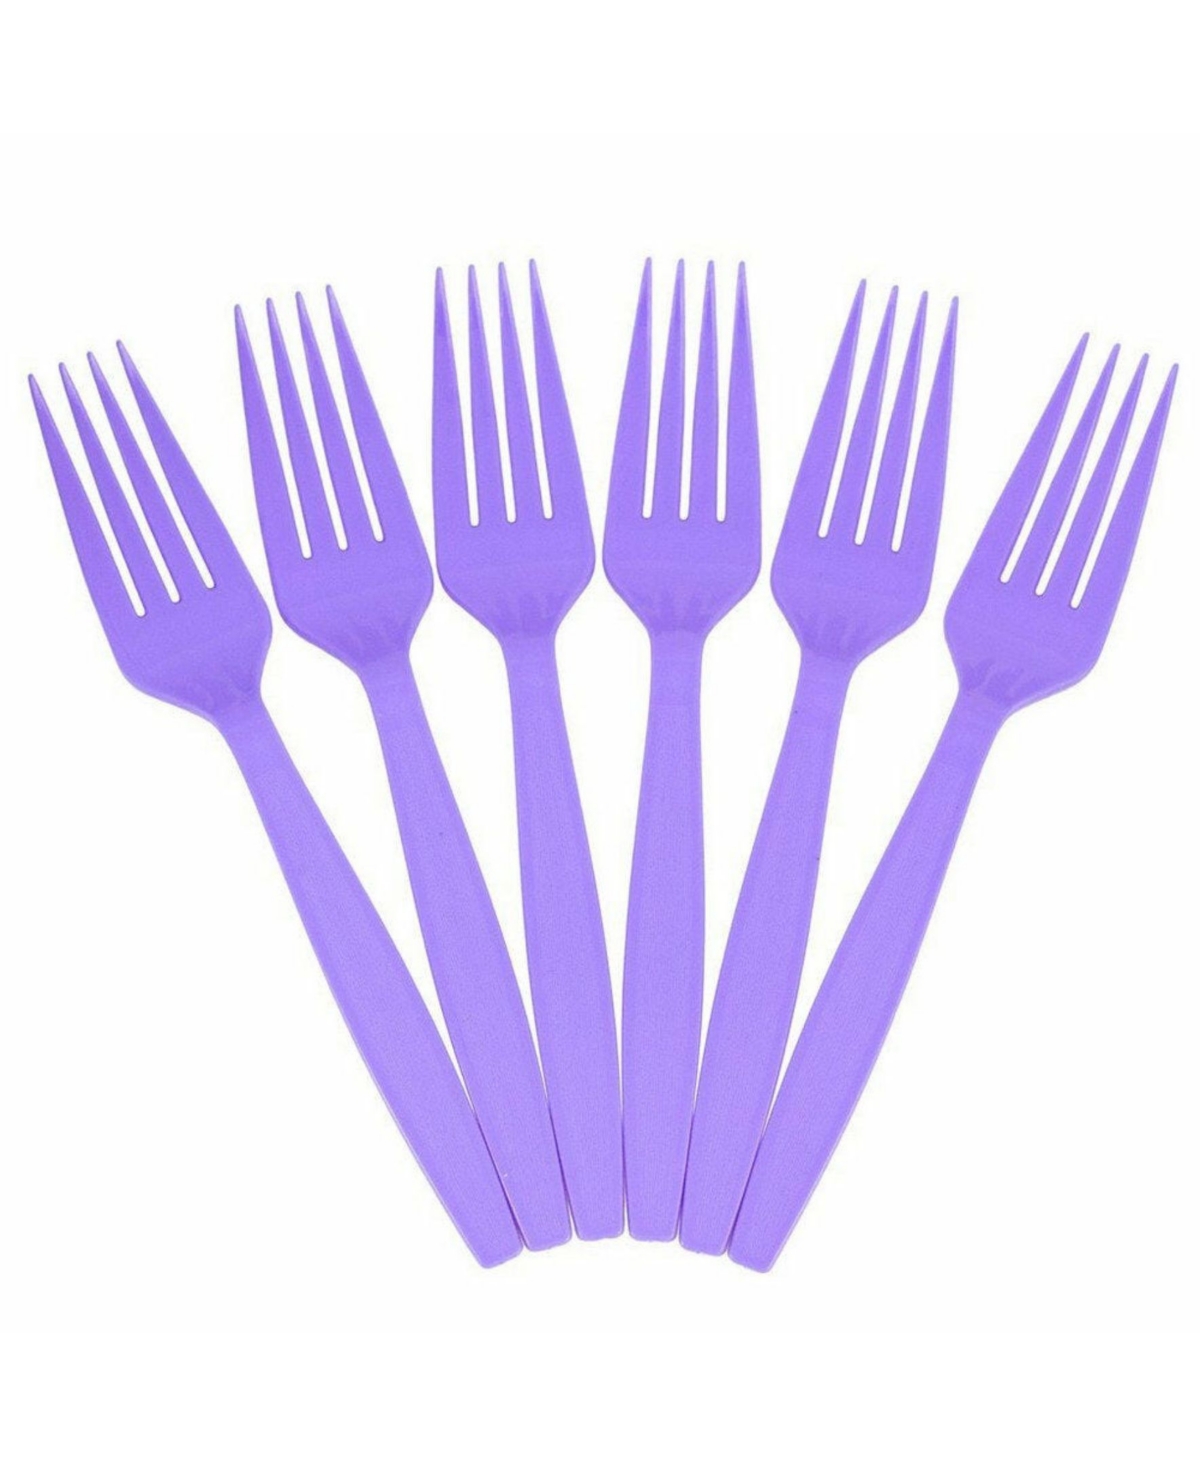 Jam Paper Big Party Pack Of Premium Plastic Forks In Purple